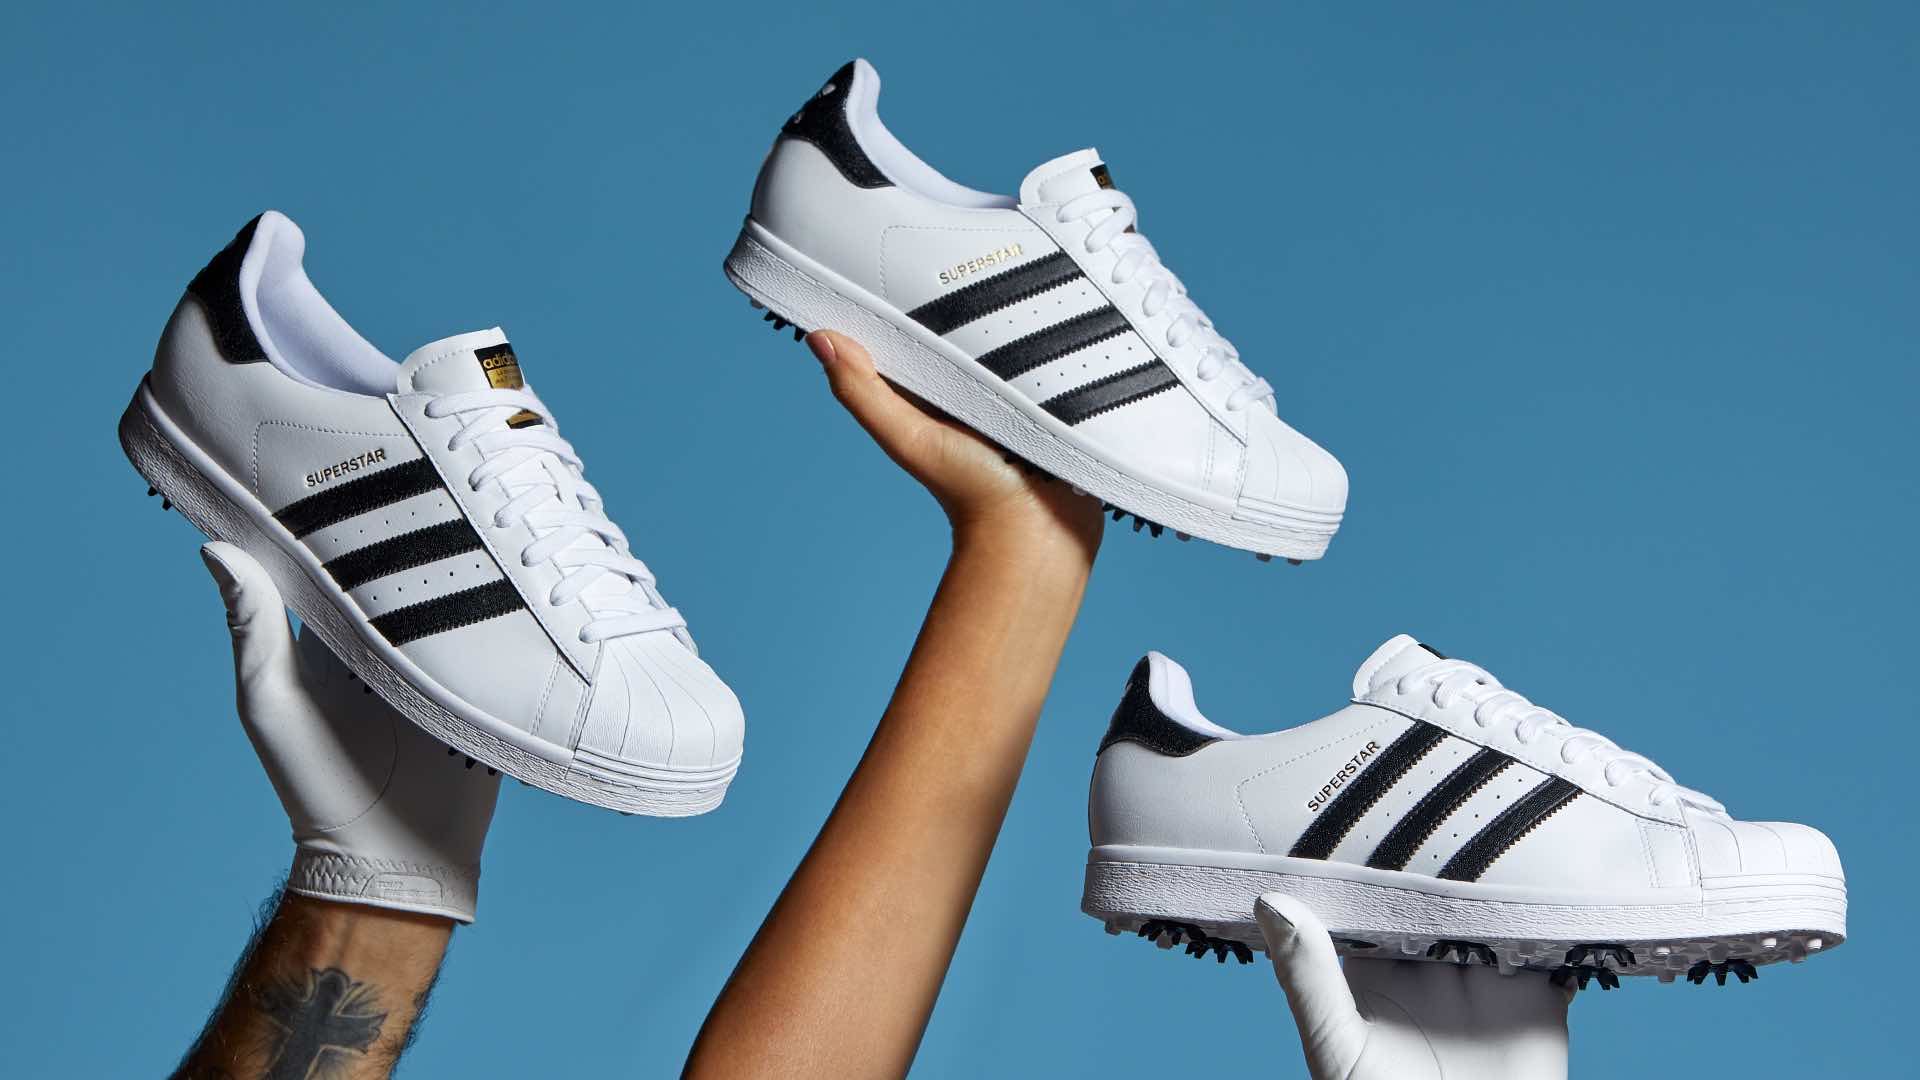 Adidas Superstar Limited Edition Brings 